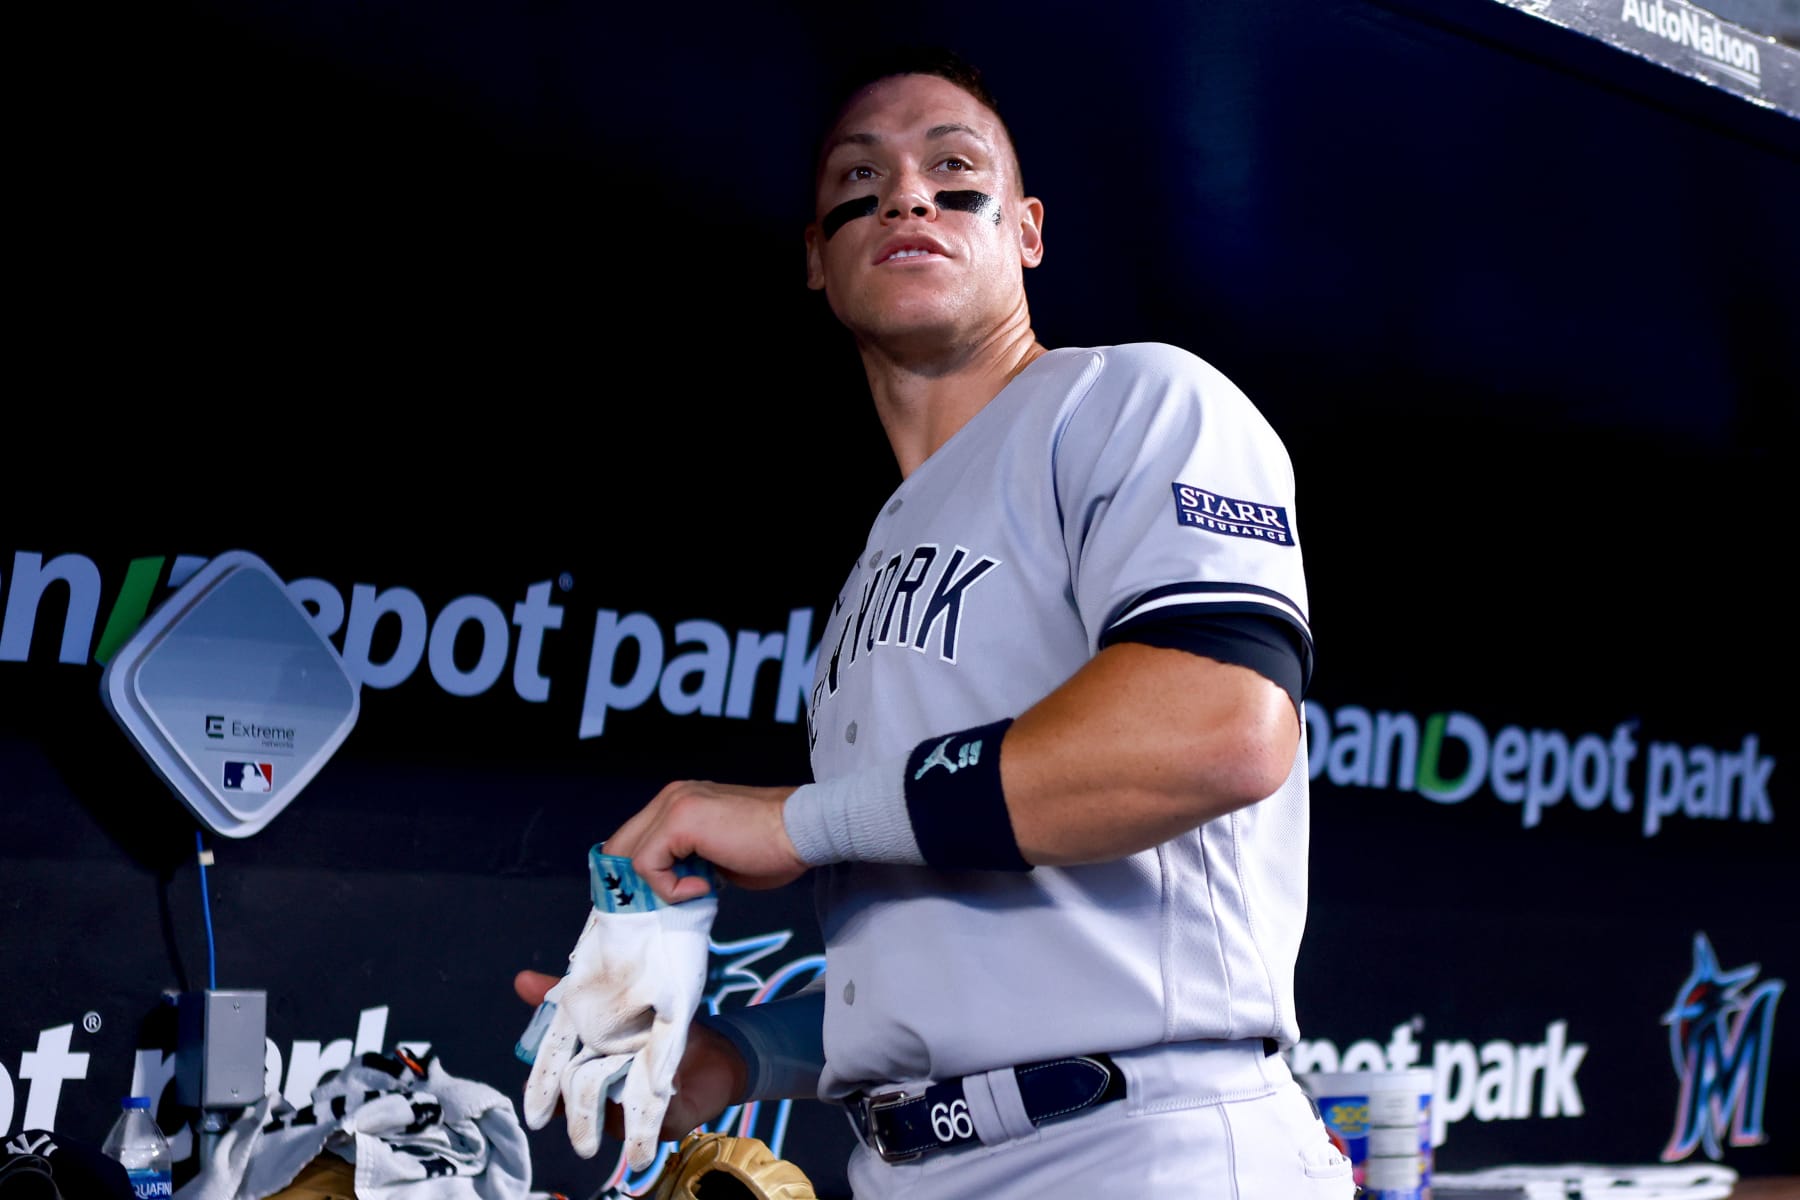 Mets' Michael Conforto, Yankees' Aaron Judge bring the hammer in